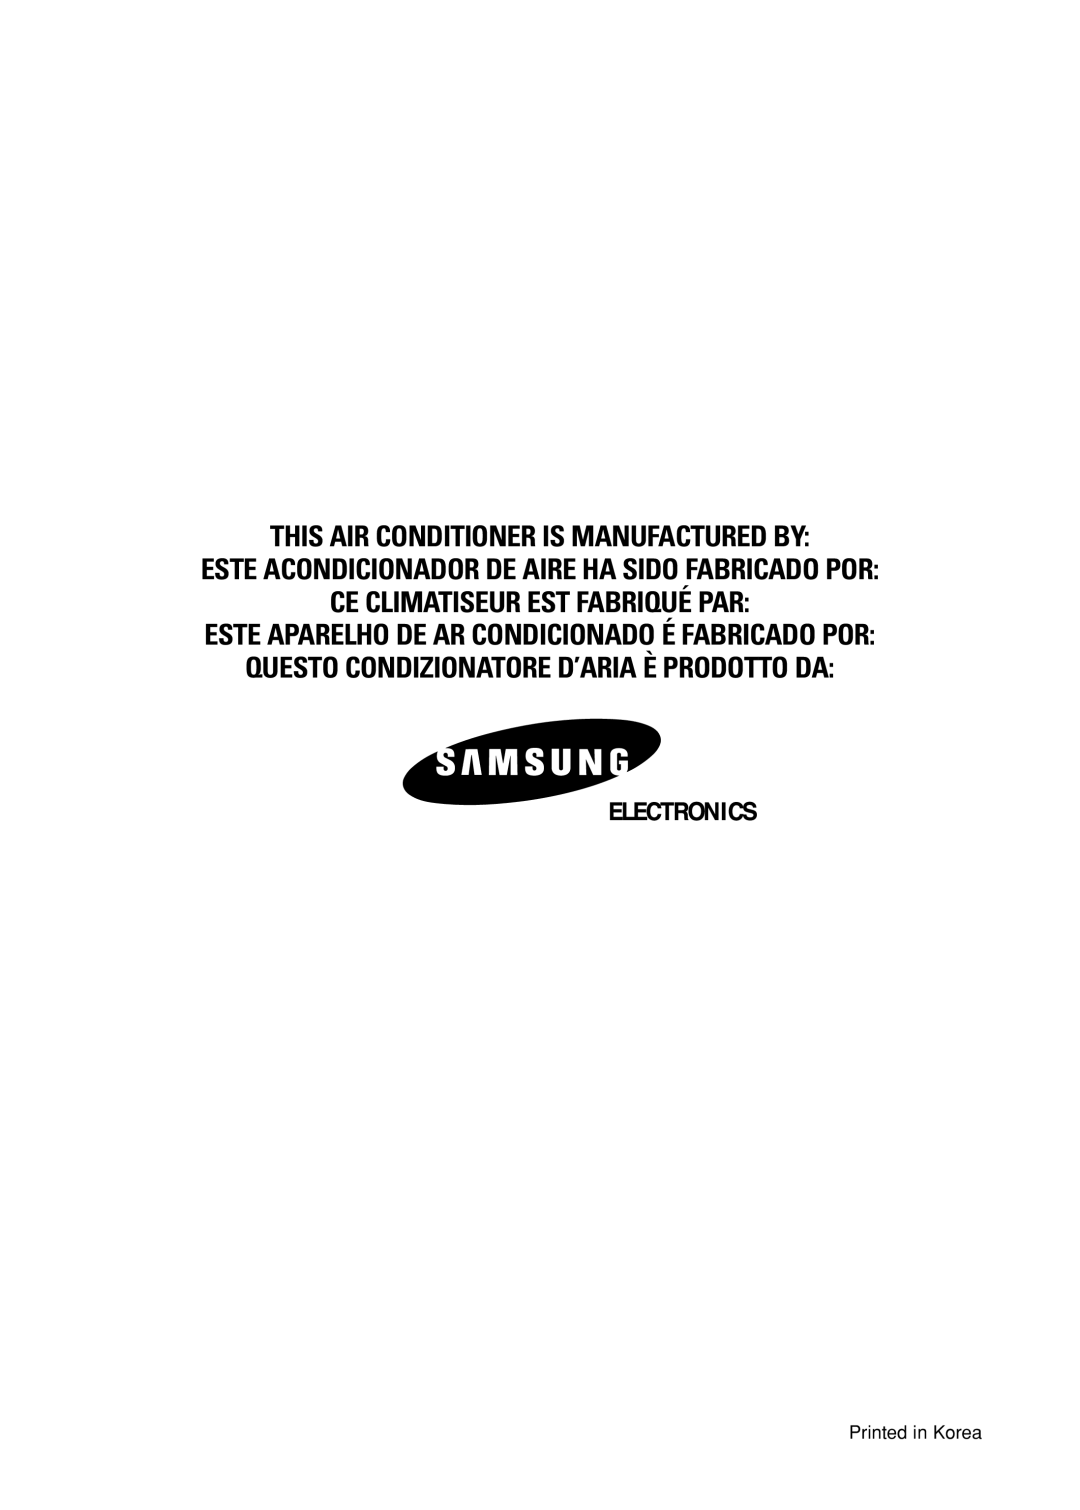 Samsung AWT20FBMBA/BB This Air Conditioner Is Manufactured By, Este Acondicionador De Aire Ha Sido Fabricado Por 